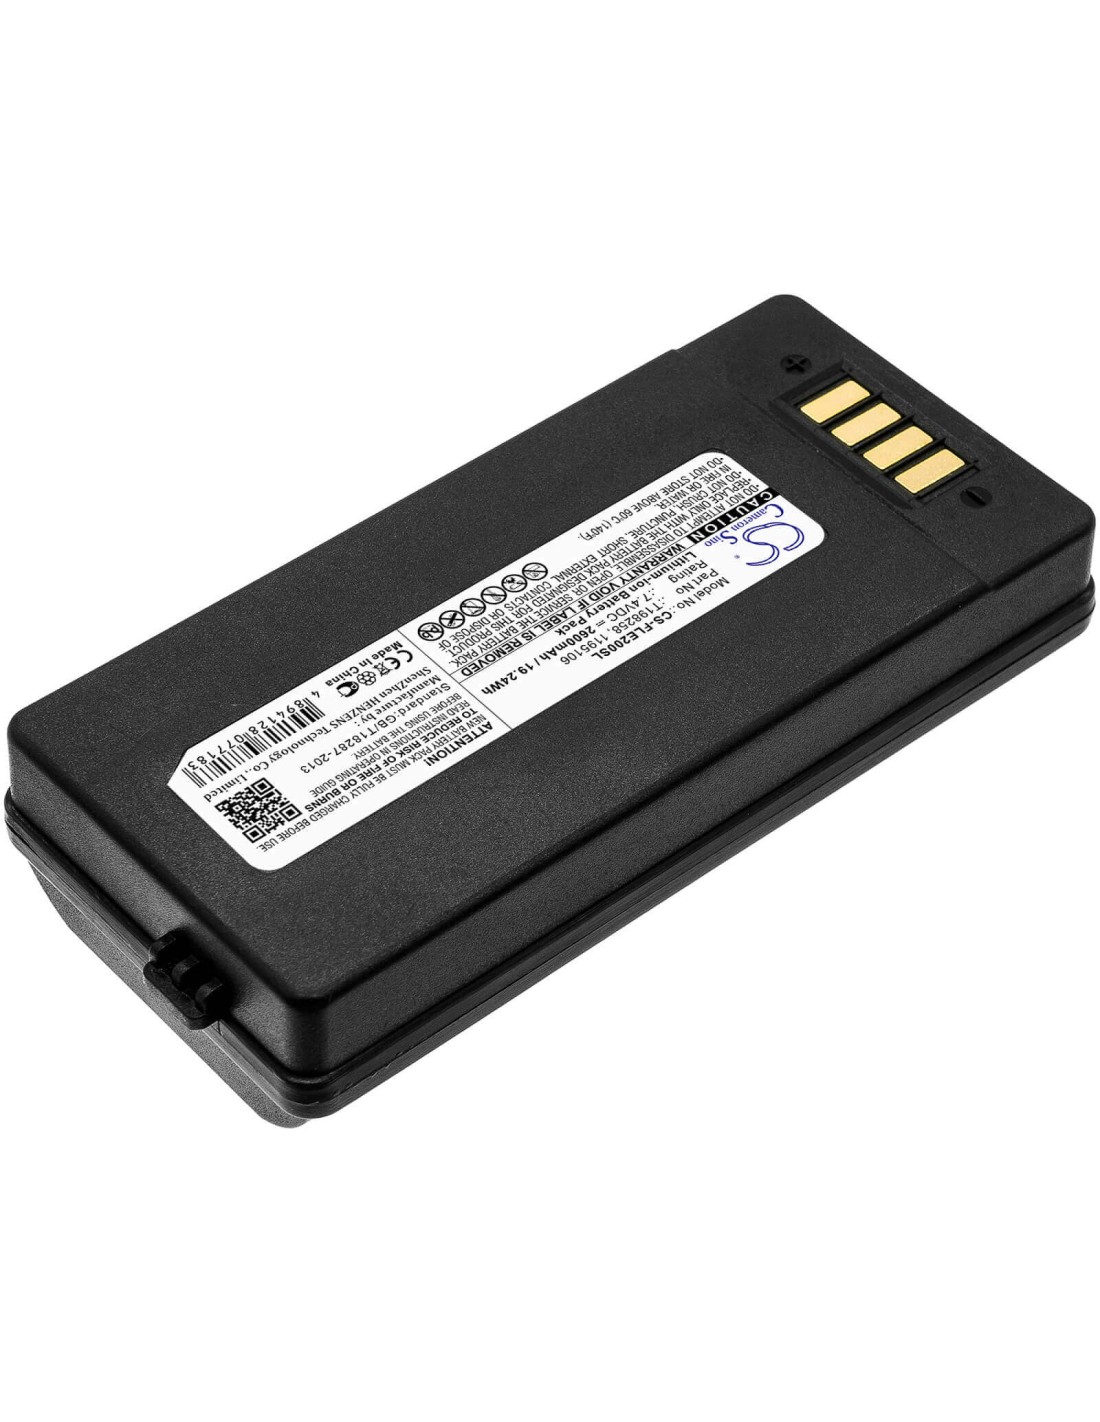 Battery for Flir Thermacam E2, Thermacam Ex320 7.4V, 2600mAh - 19.24Wh